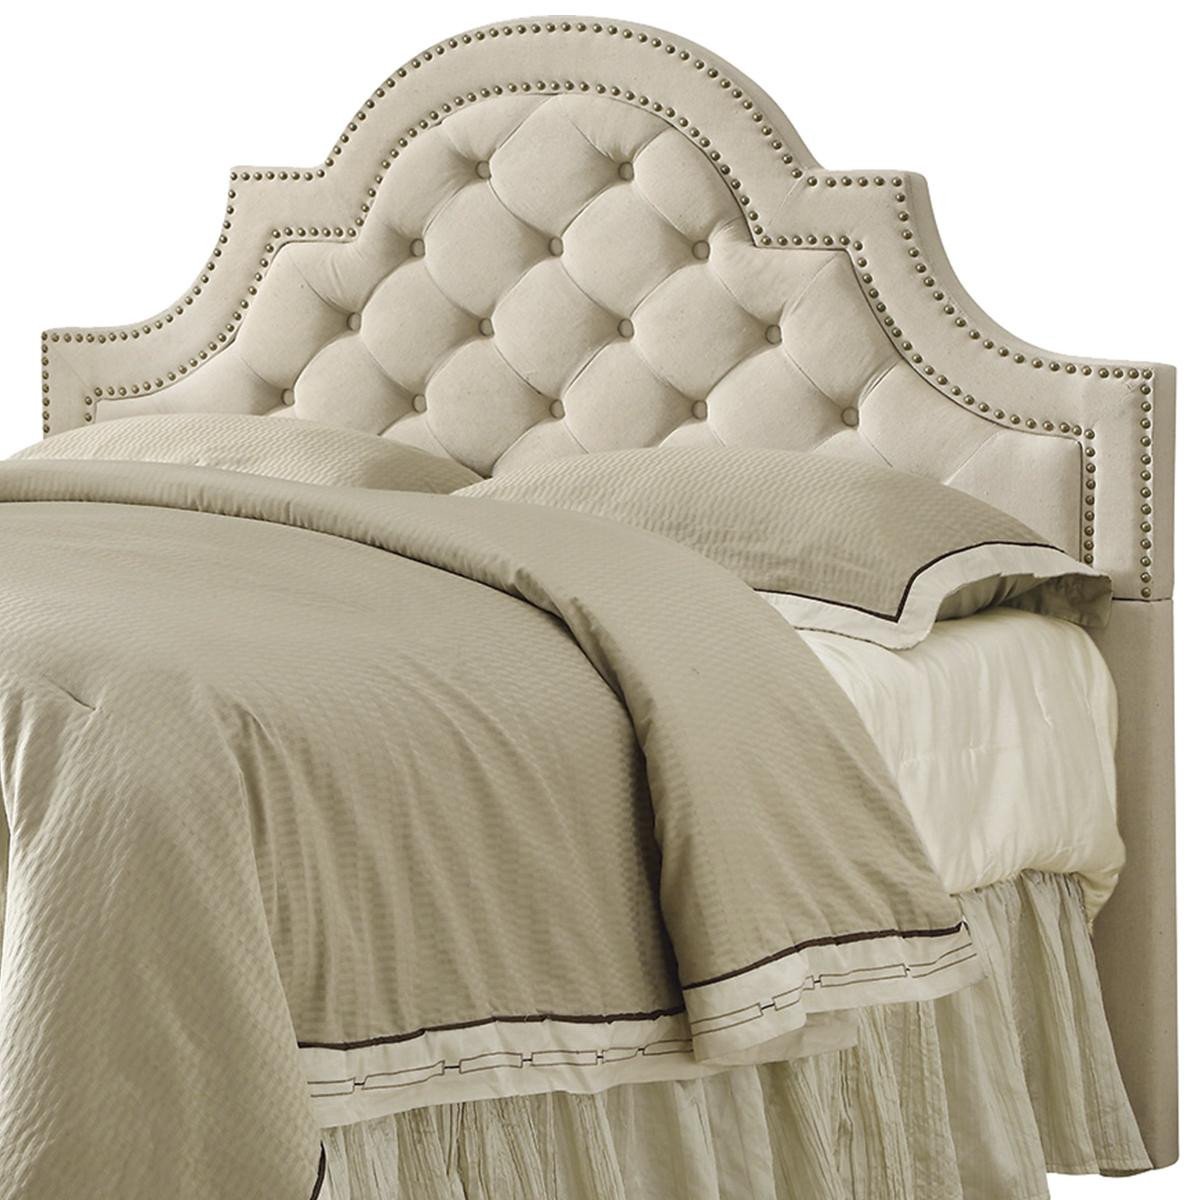 Nebraska Furniture Mart Bedroom Set Beautiful at Home Ojai Full Queen Headboard In Beige